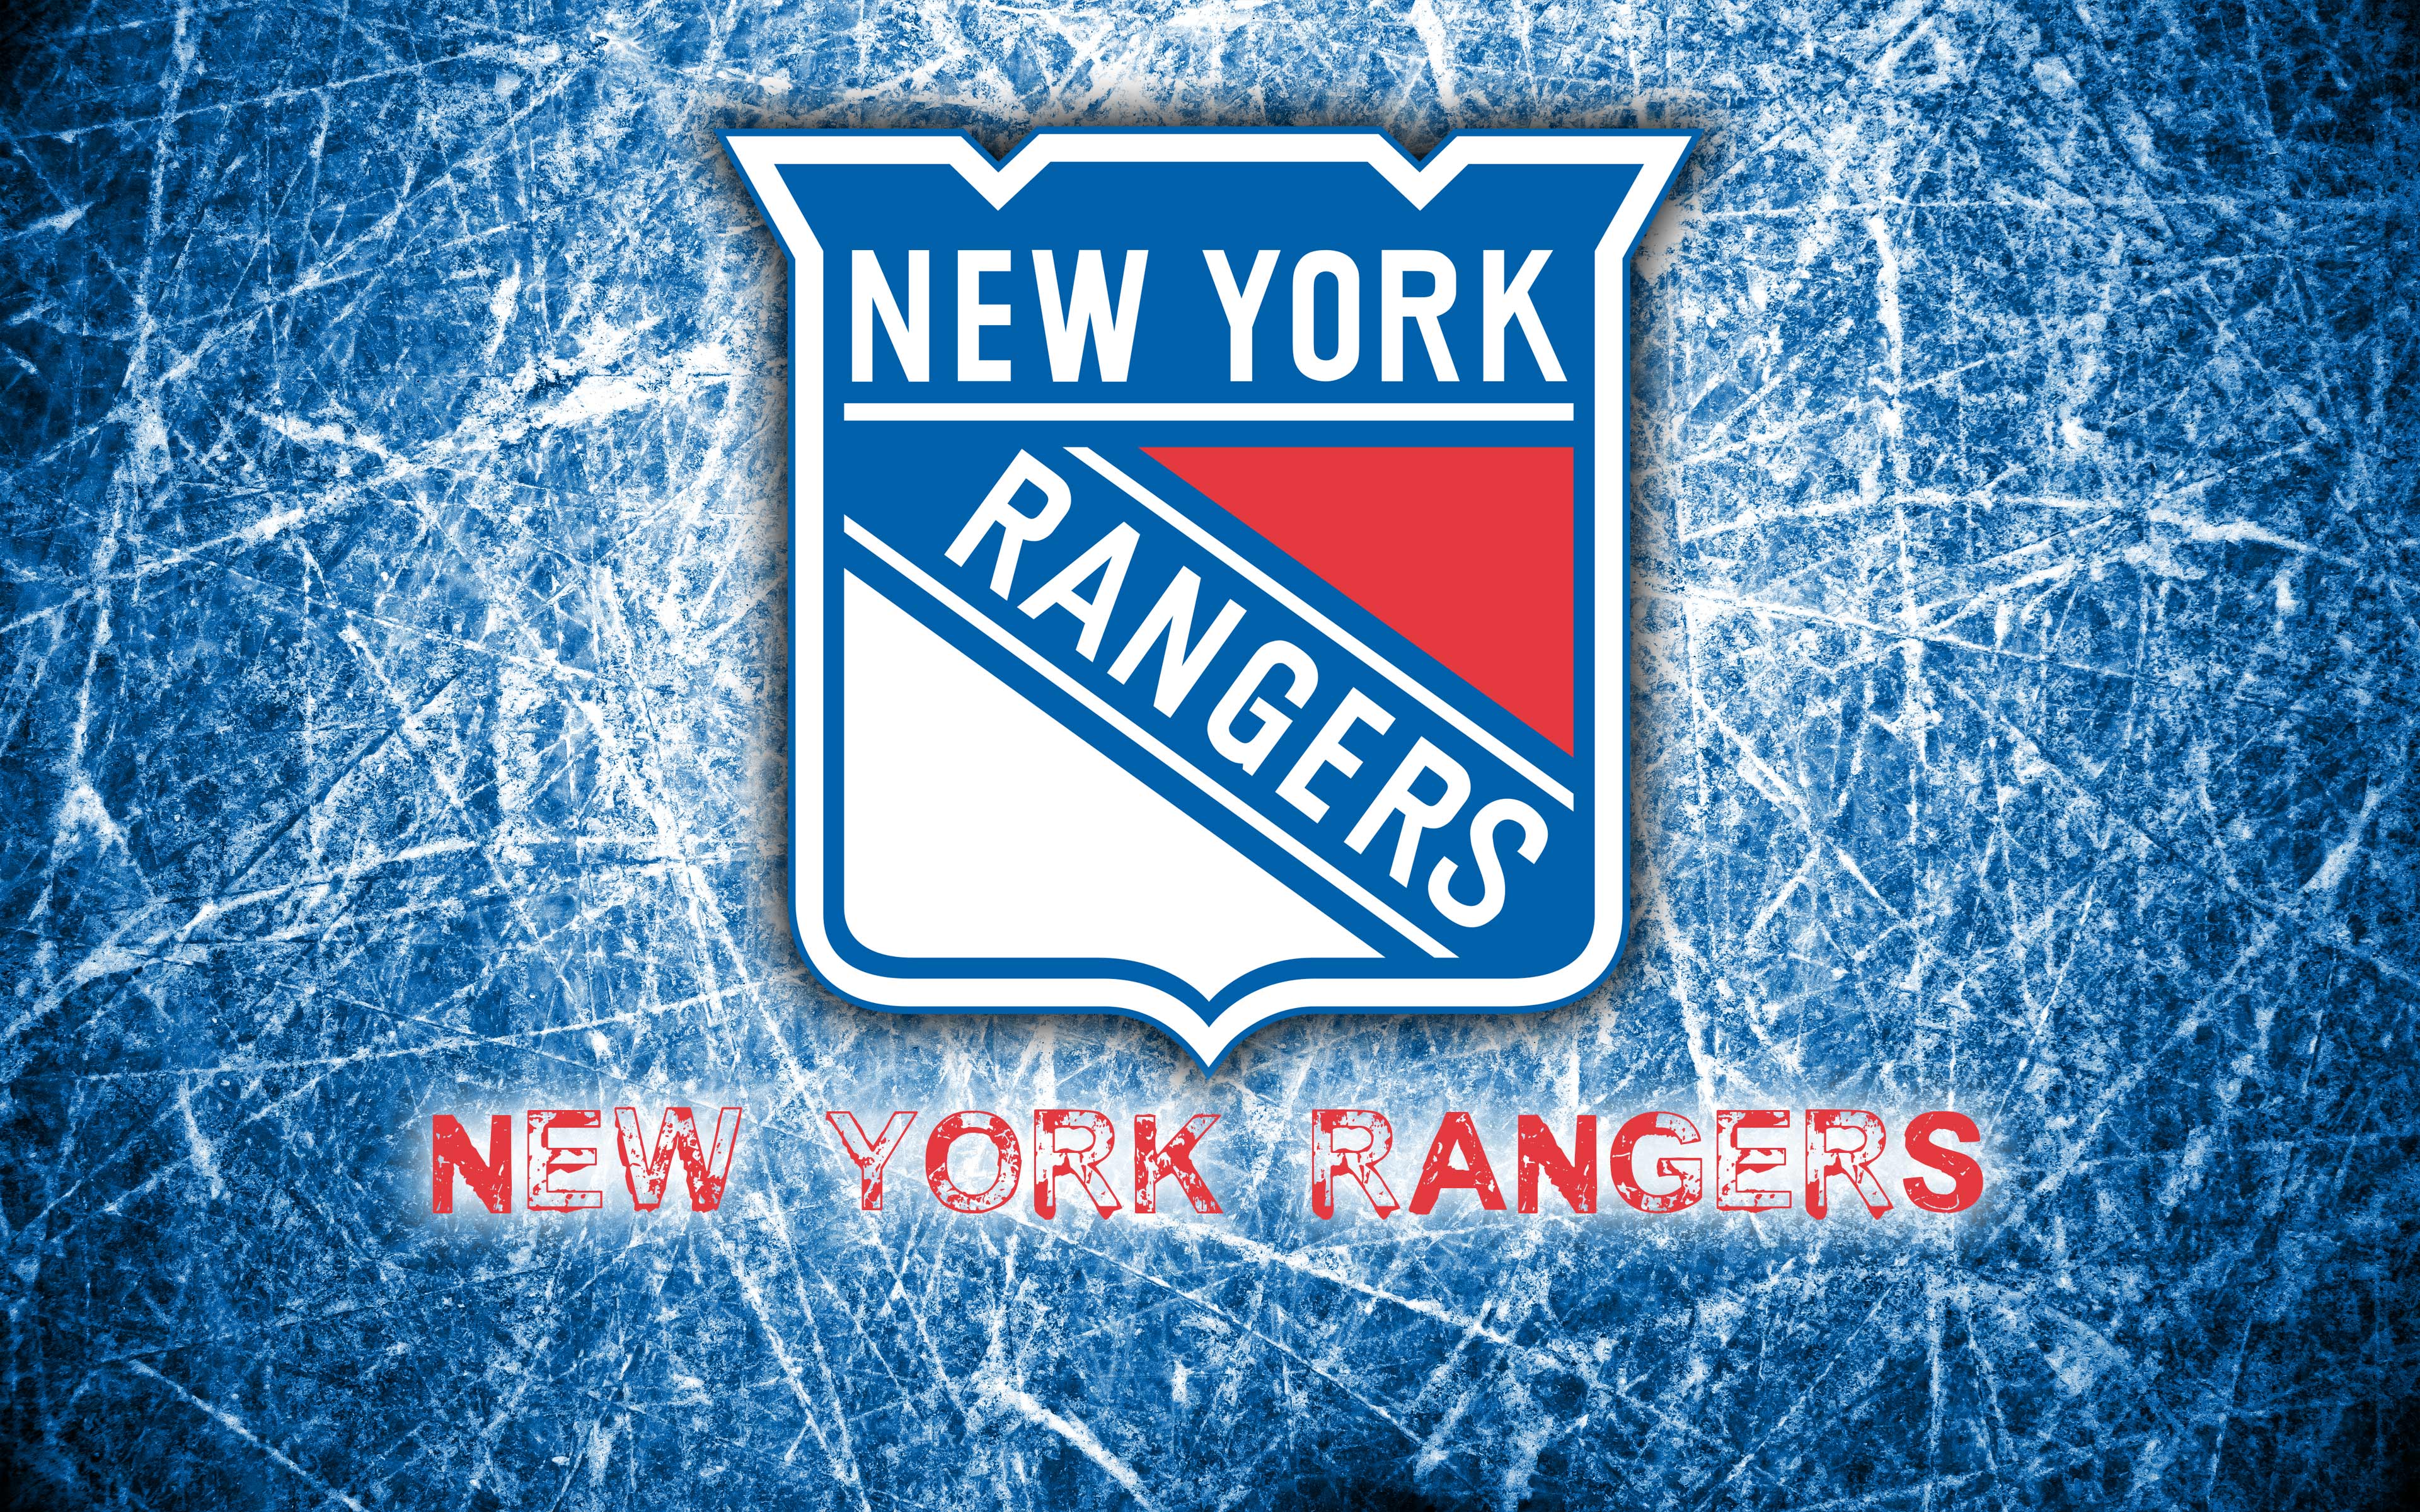 New York Rangers wallpaper 3840x2400 54079 3840x2400